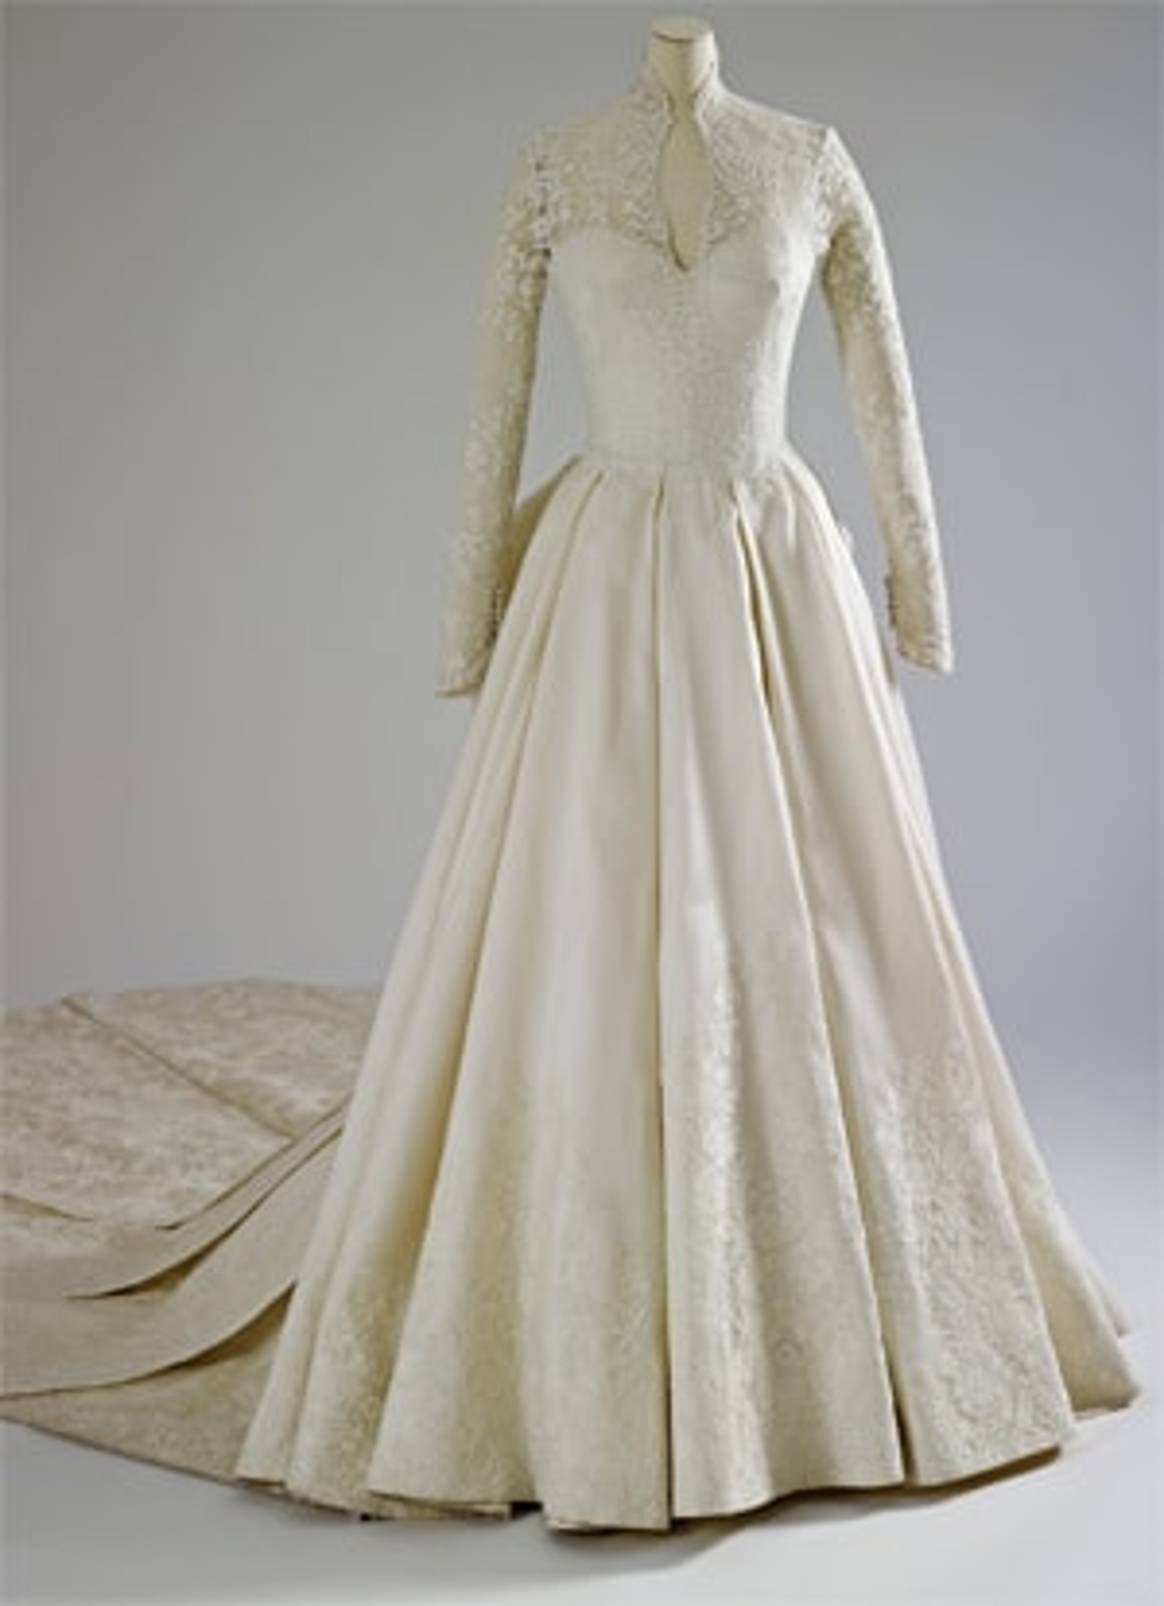 Duchess’ wedding gown breaks records